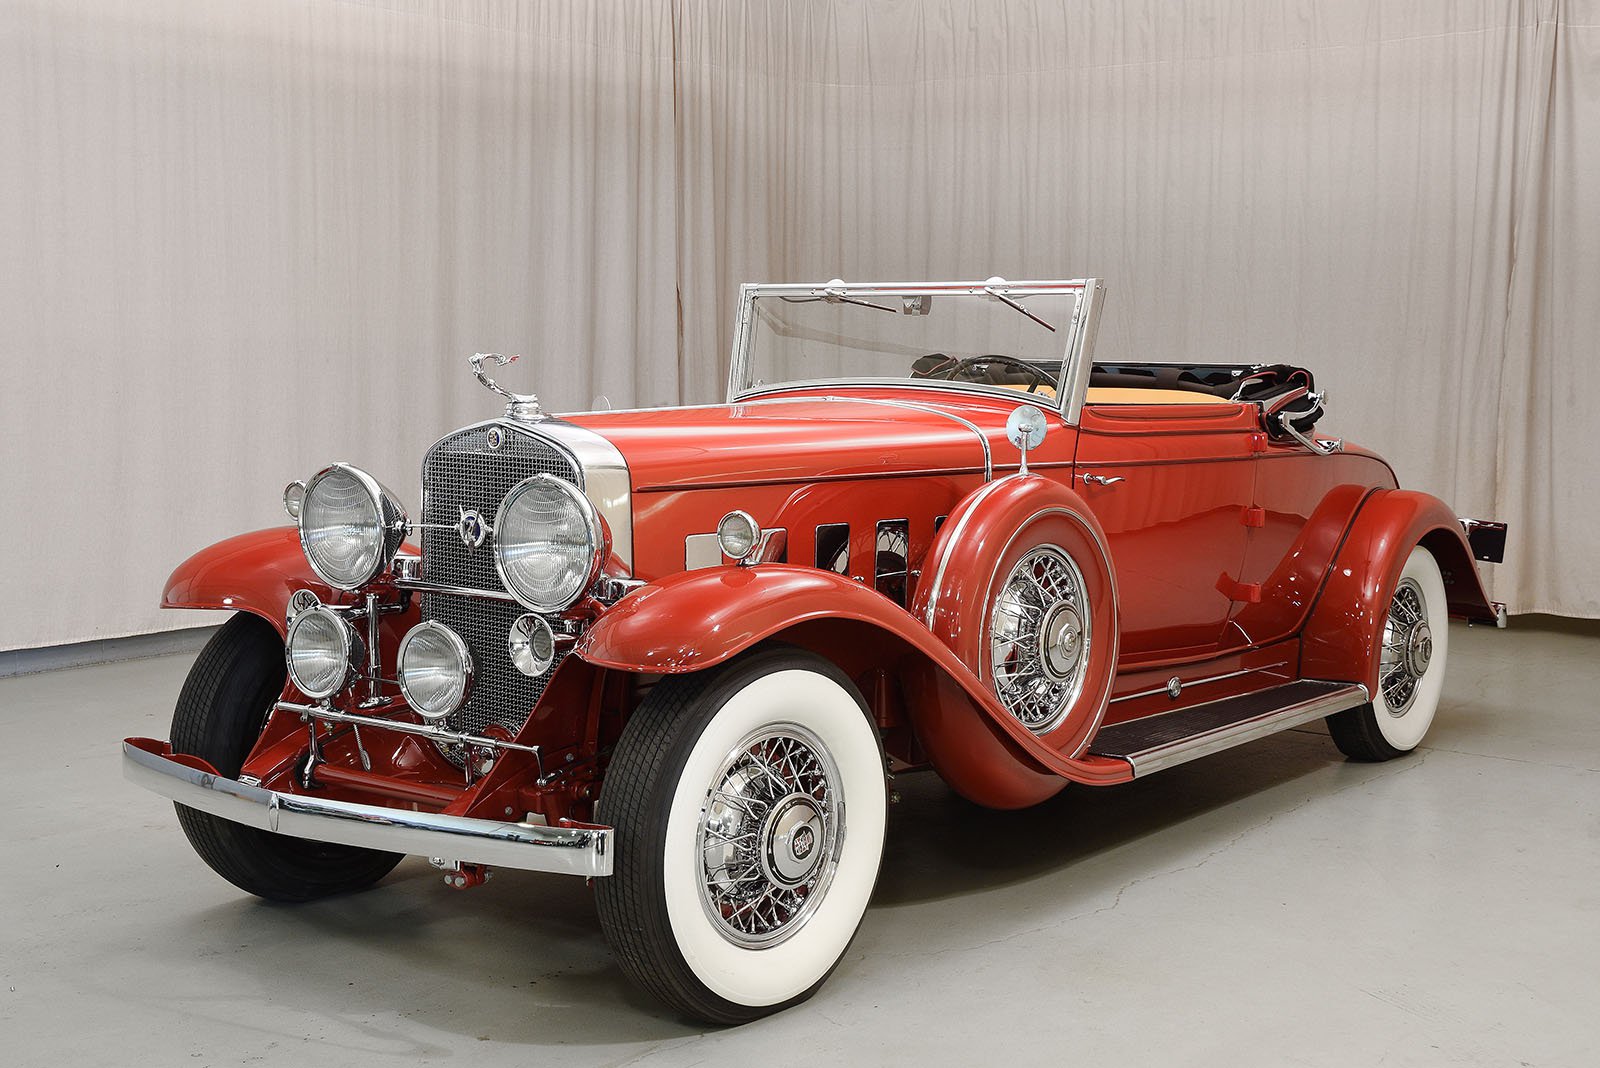 1931 Cadillac V12 HD wallpapers, Desktop wallpaper - most viewed